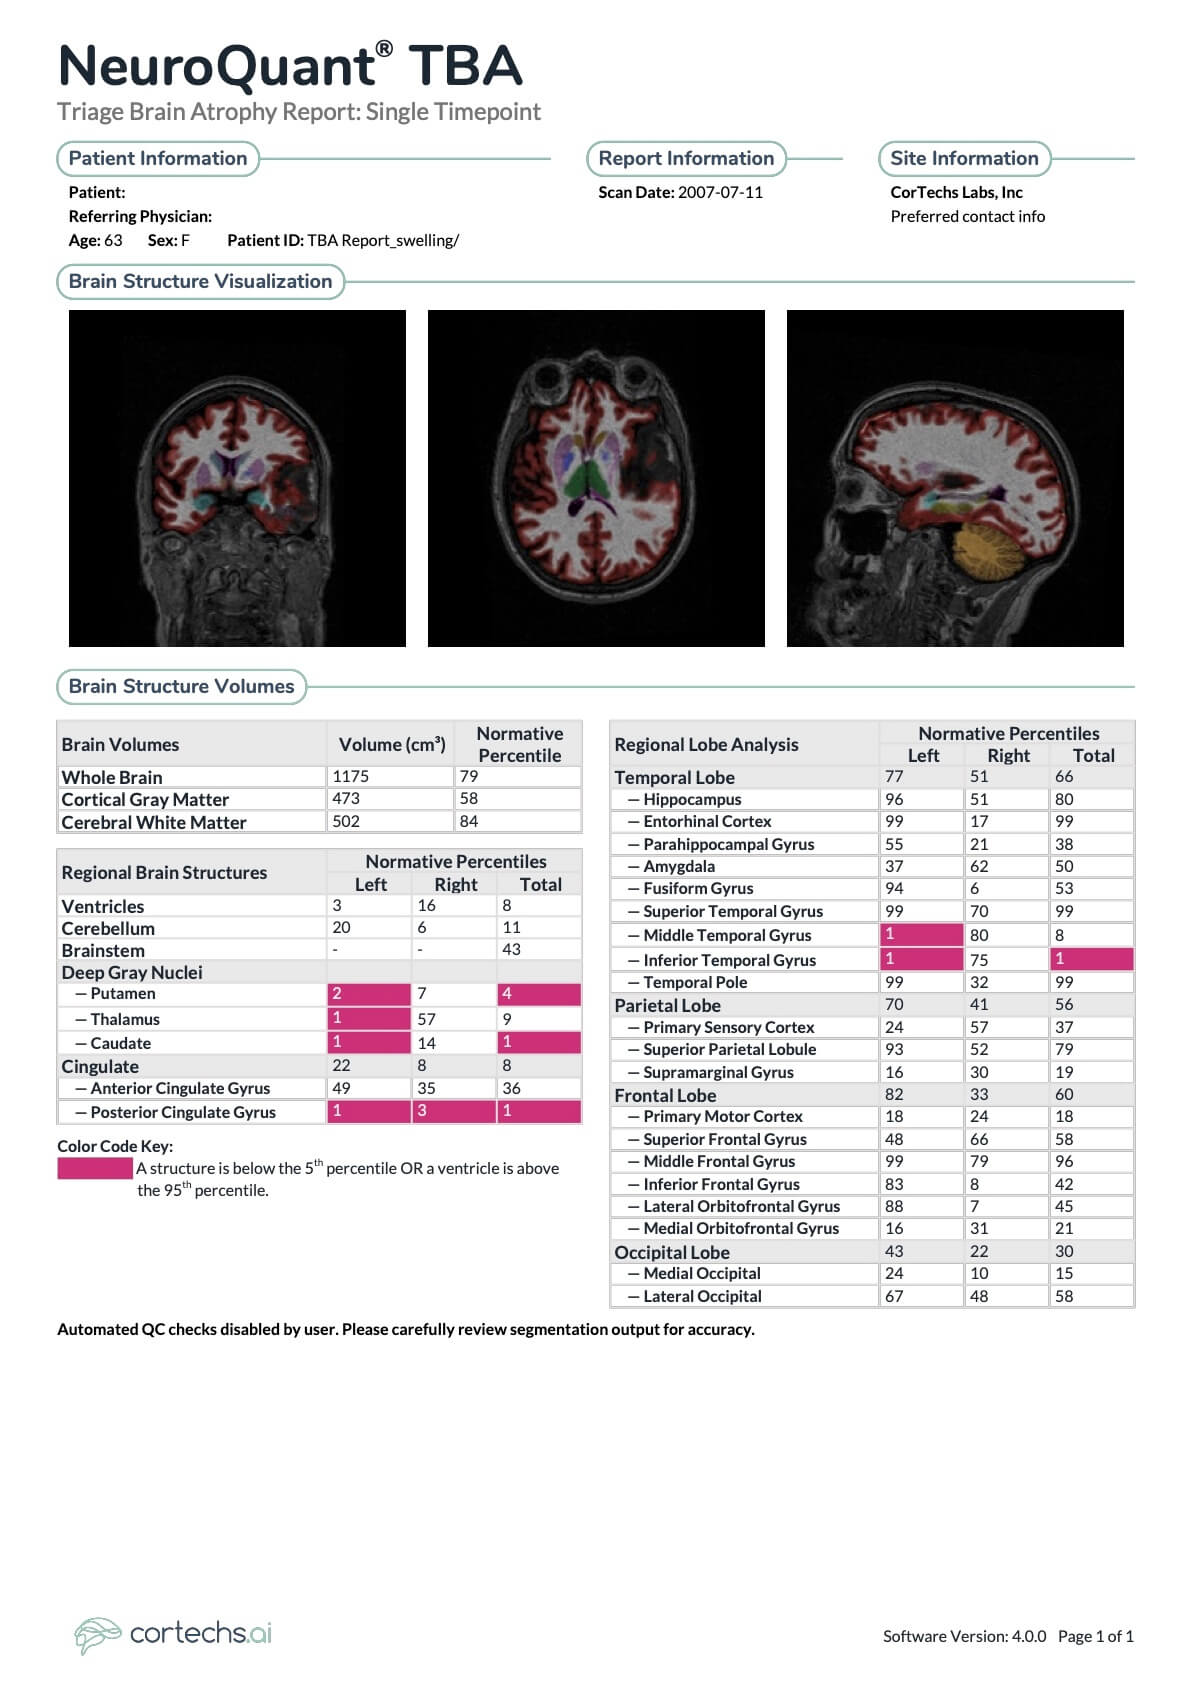 NeuroQuant 4.0: TBA Report Updates & Traumatic Brain Injuries